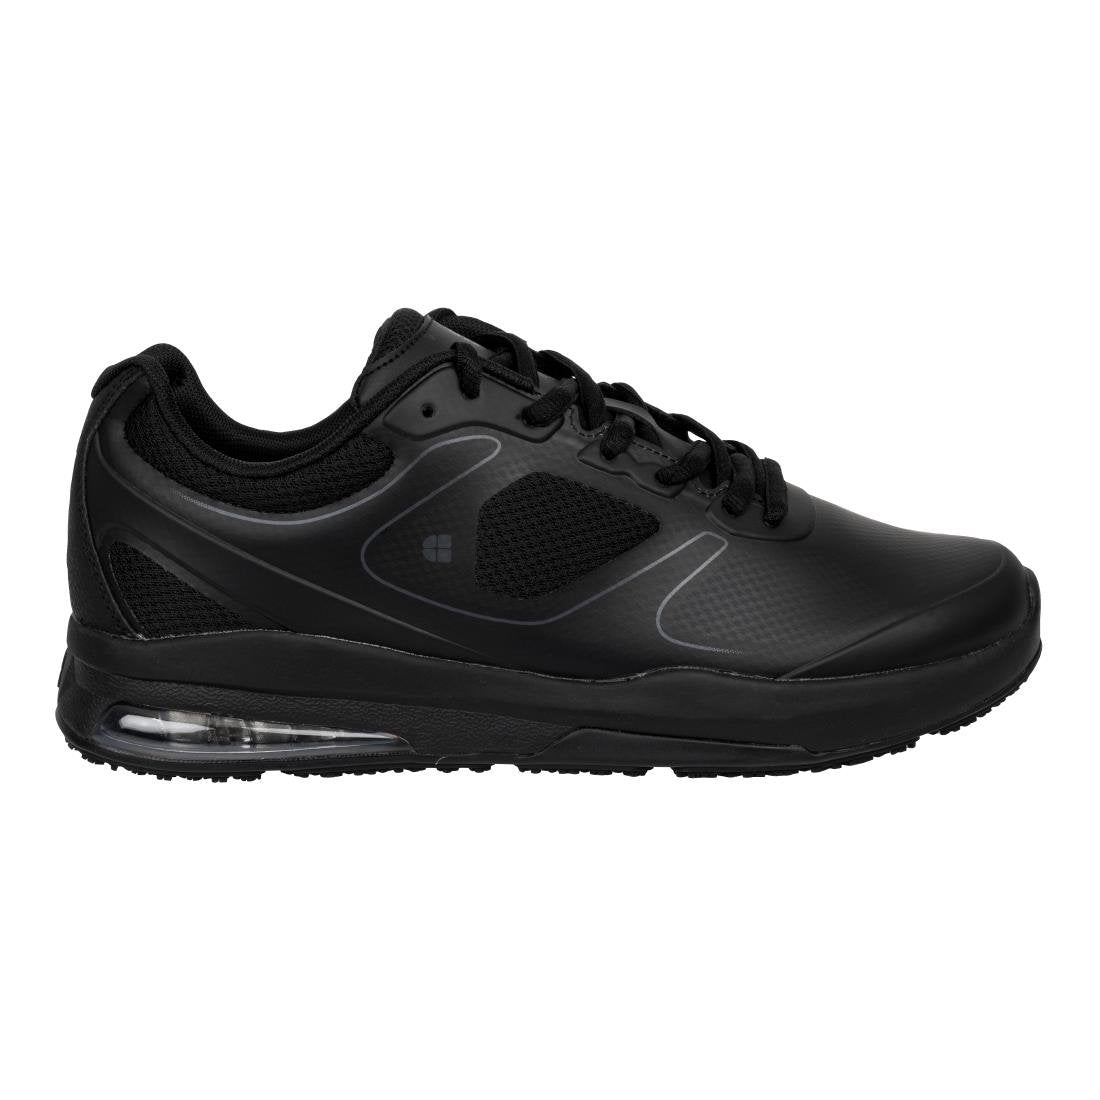 BB586-46 Shoes for Crews Men's Evolution Trainers Black Size 46